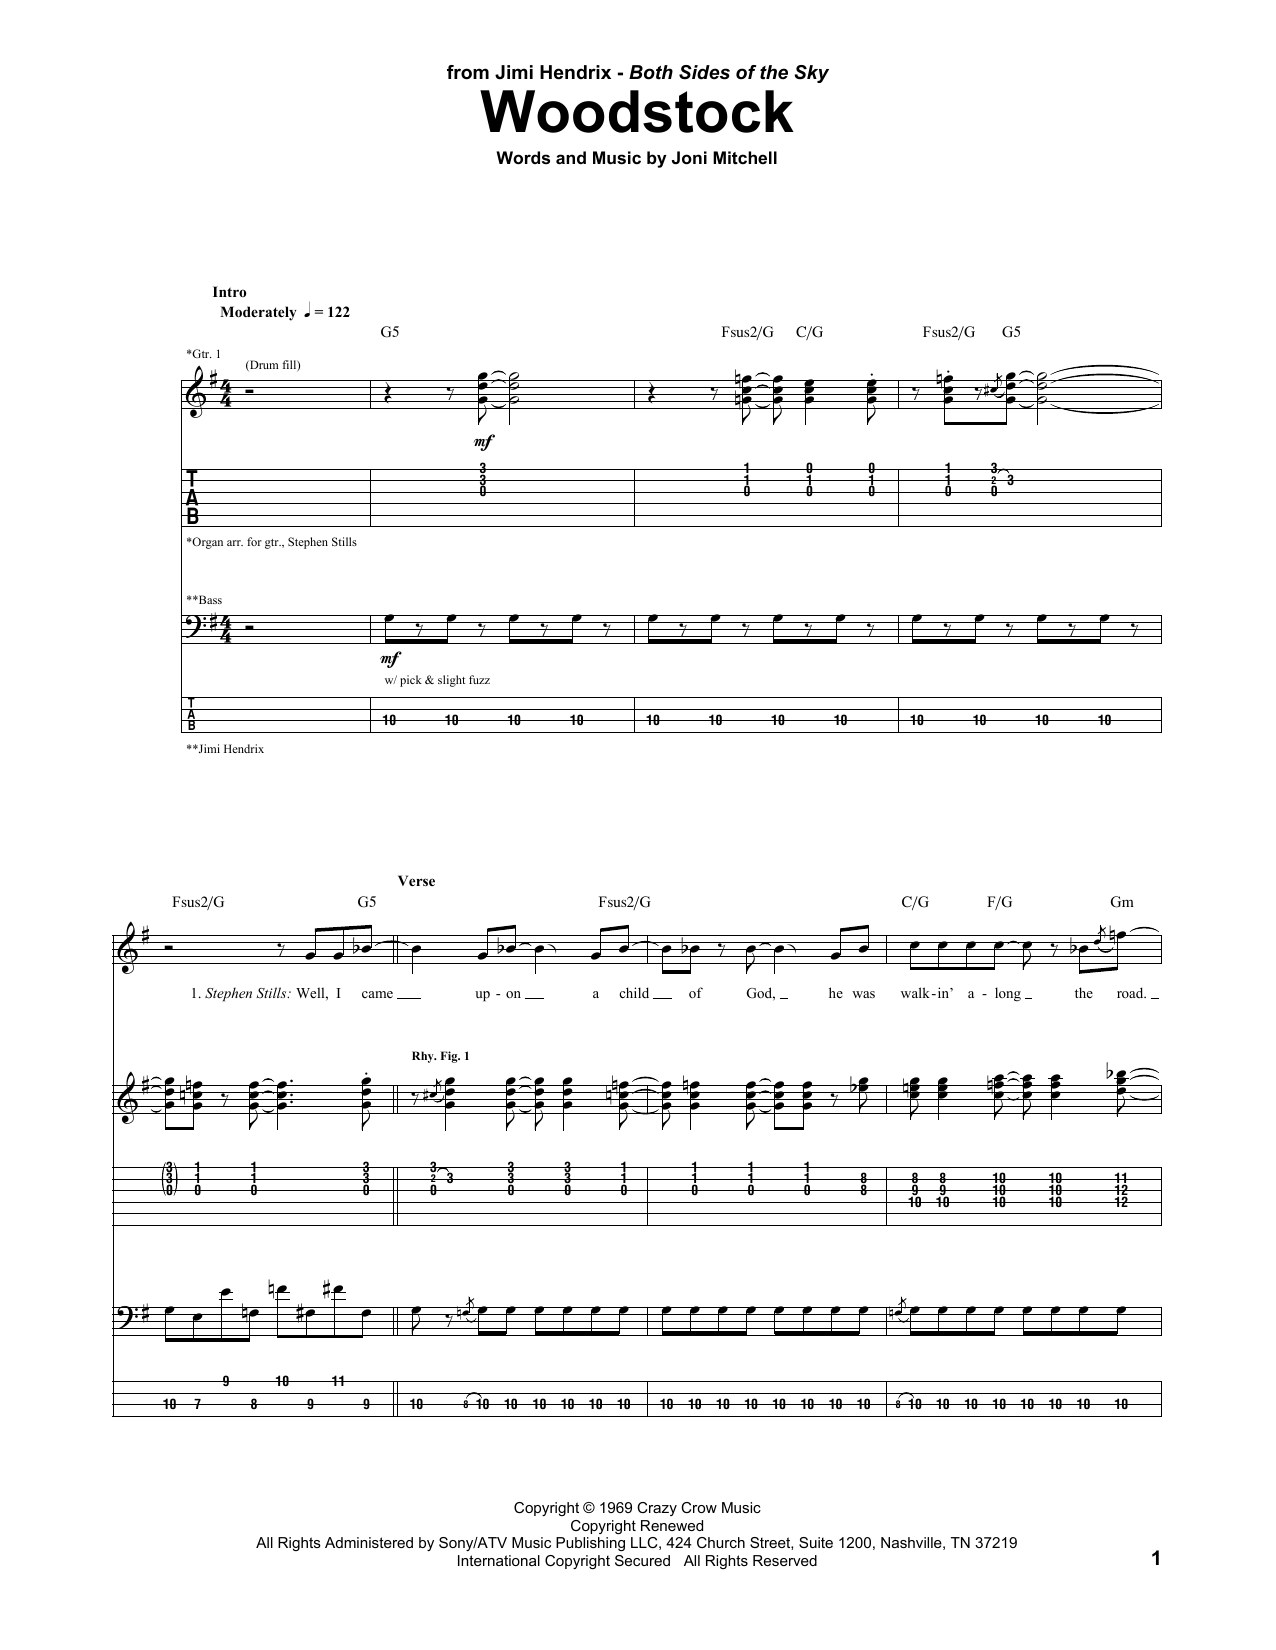 Jimi Hendrix Woodstock Sheet Music Notes & Chords for Guitar Tab - Download or Print PDF